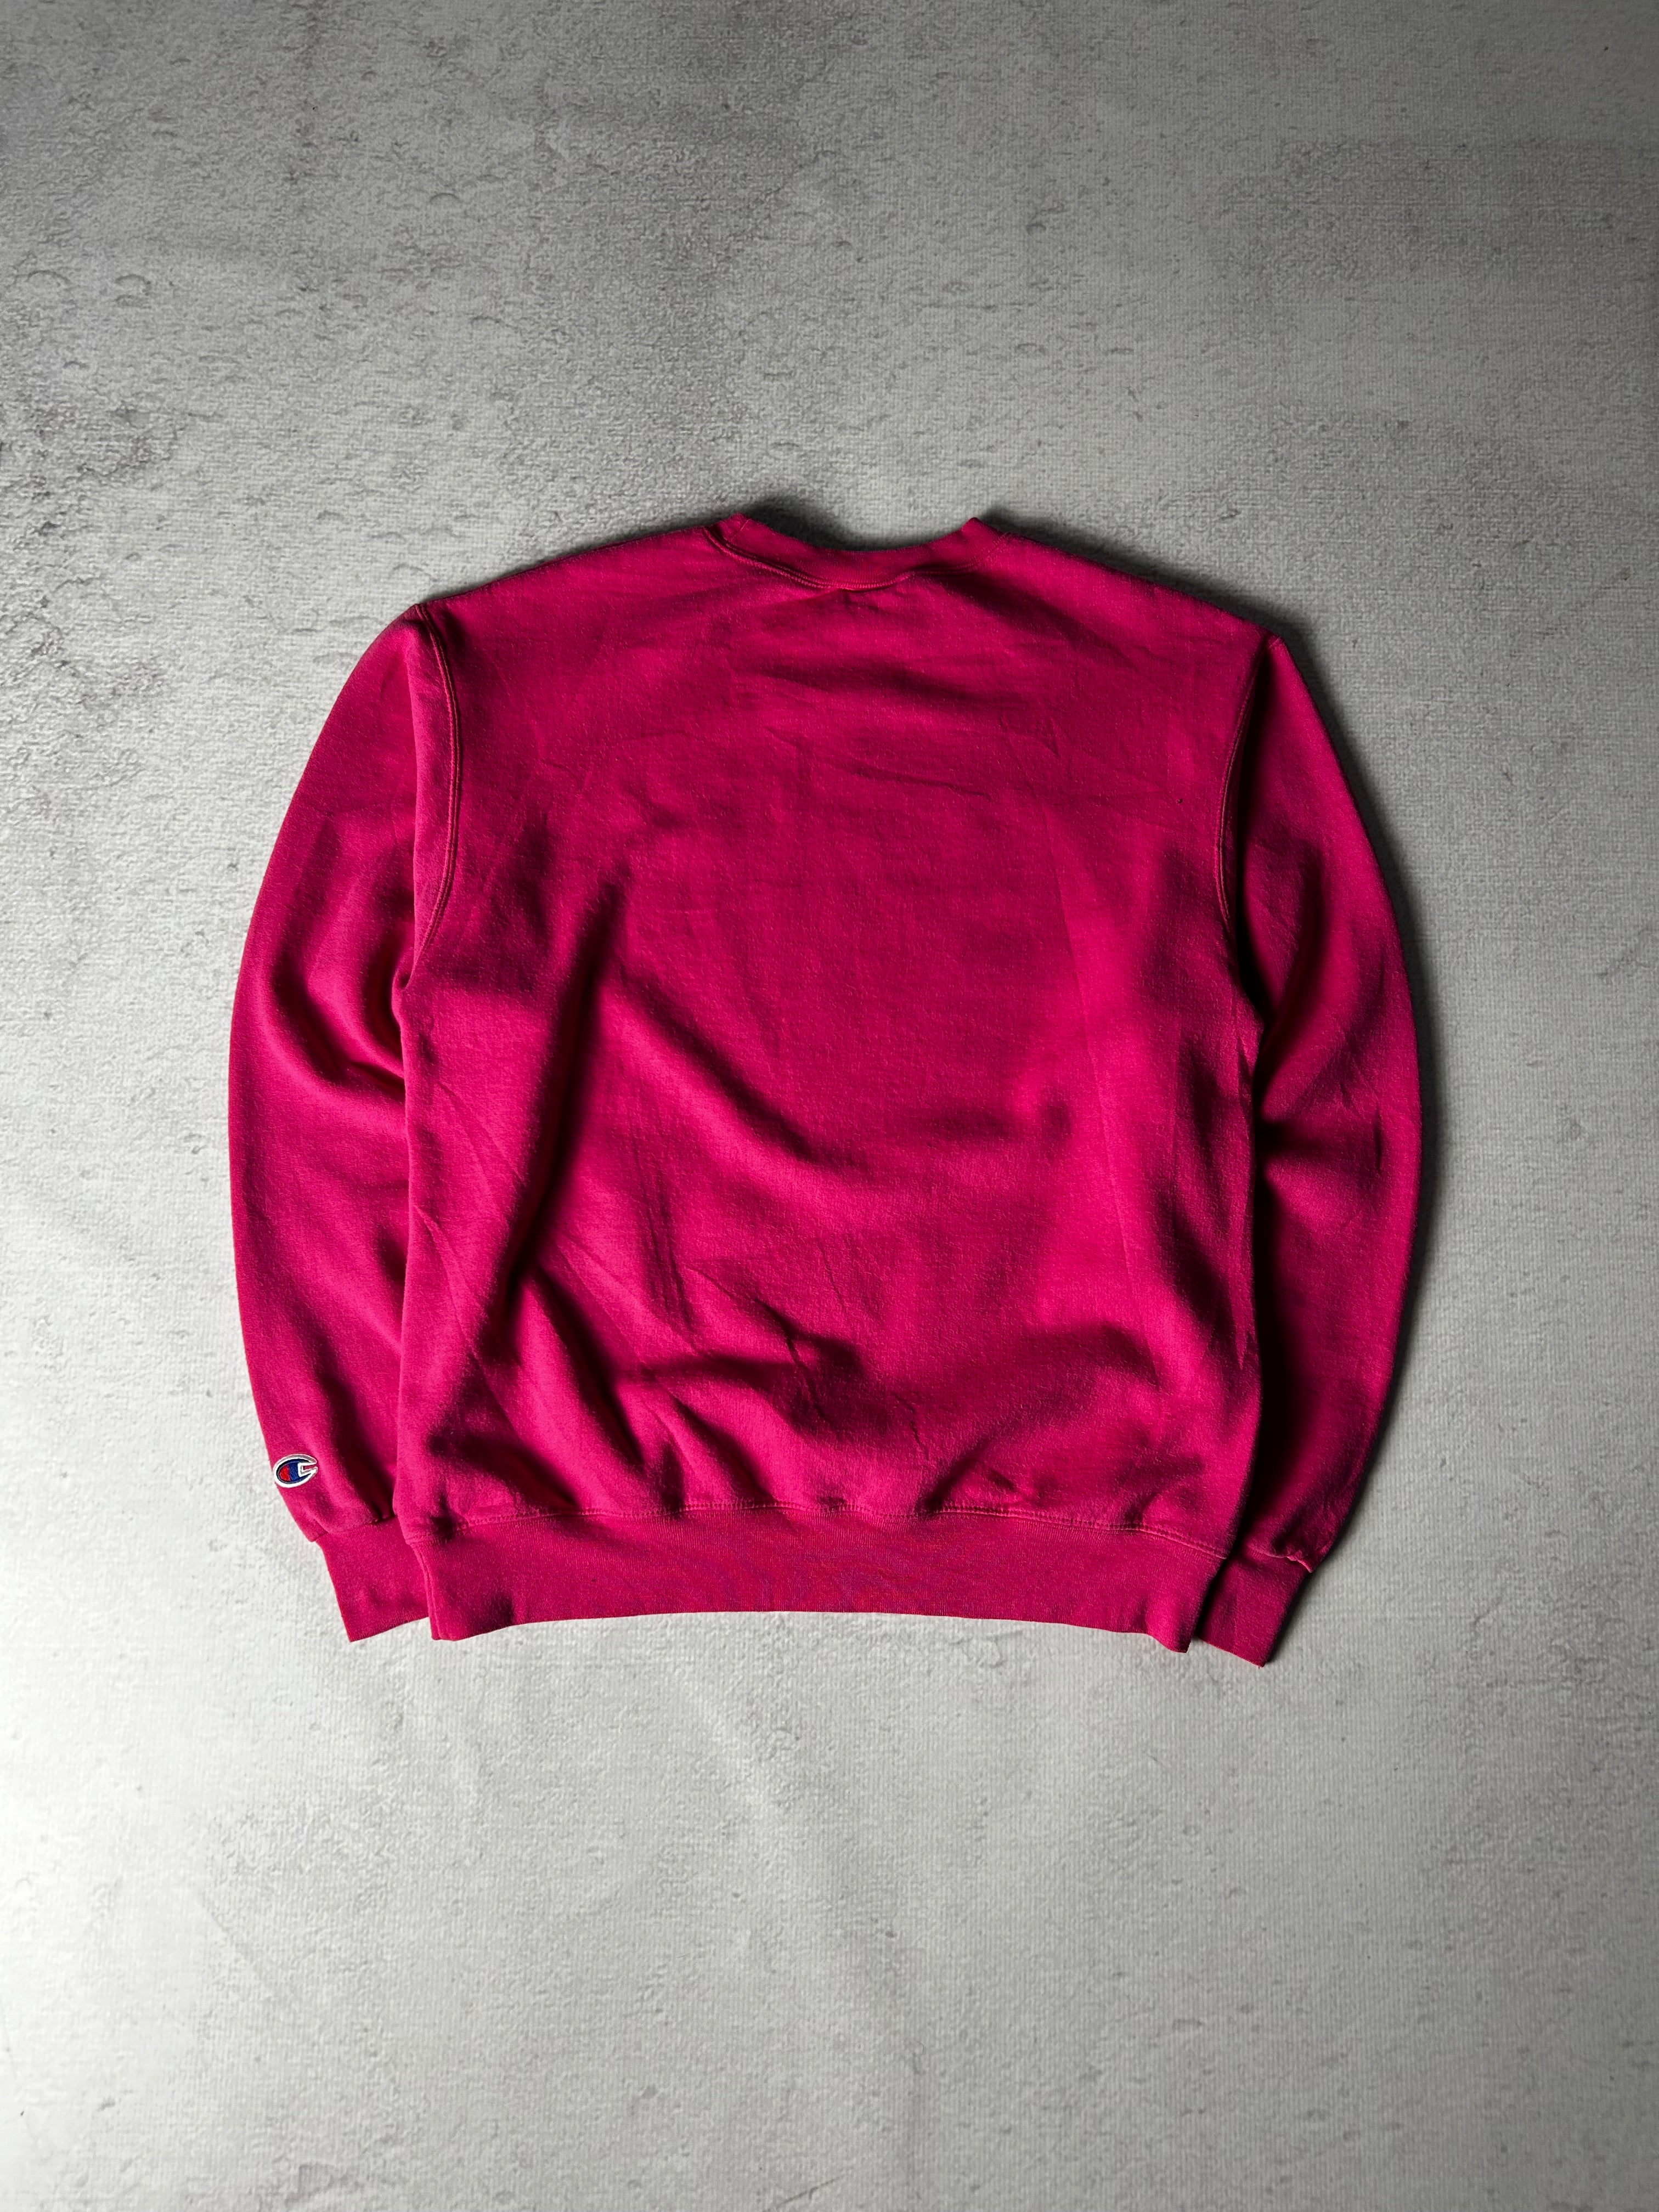 Vintage Champion Crewneck Sweatshirt - Men's Medium